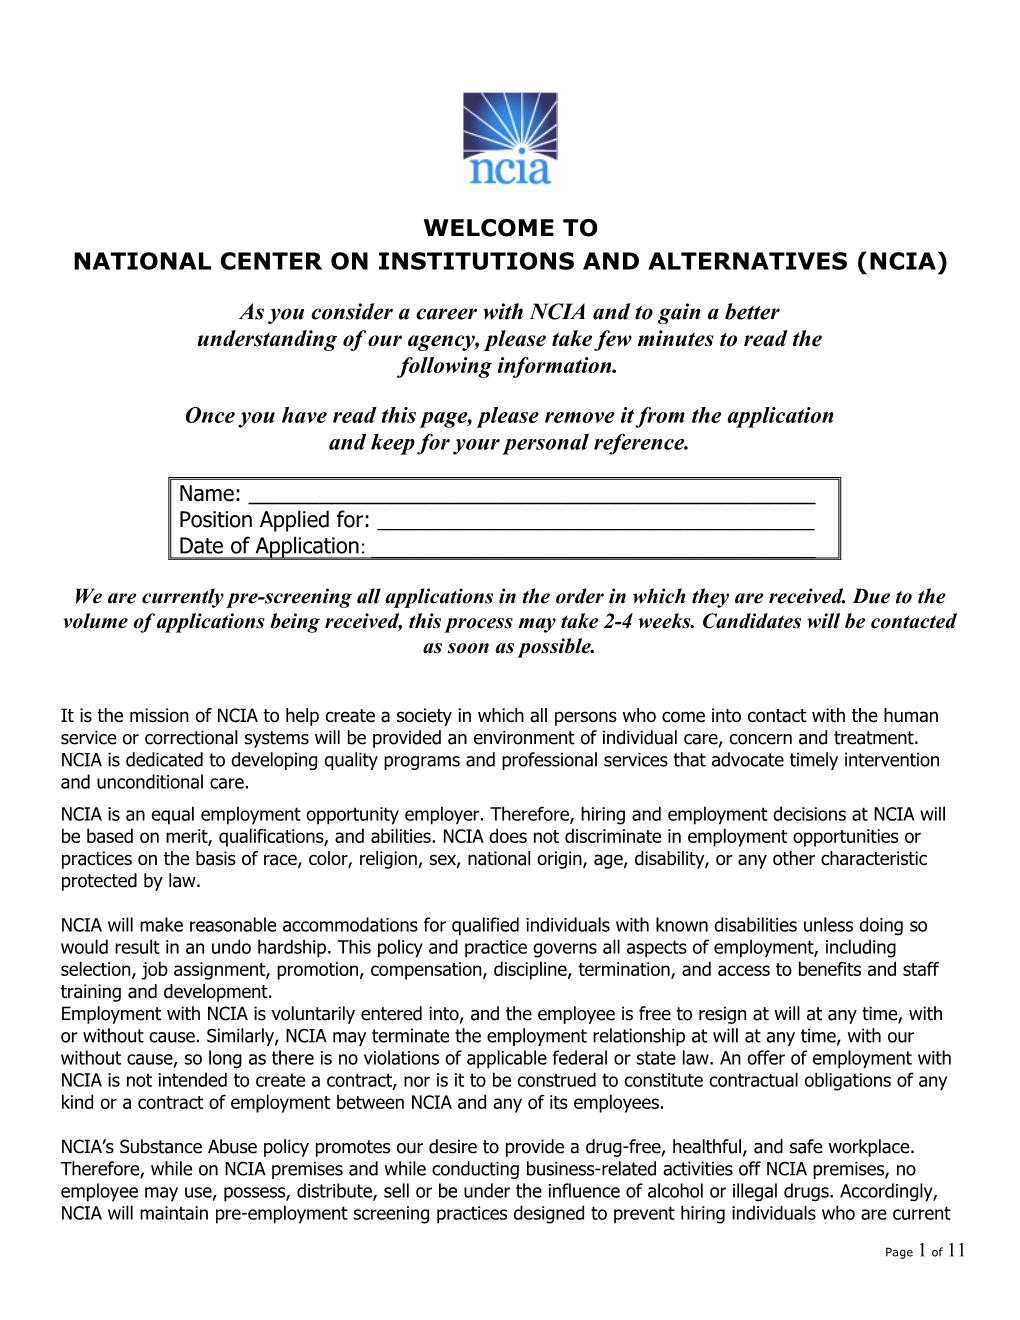 National Center on Institutions & Alternatives